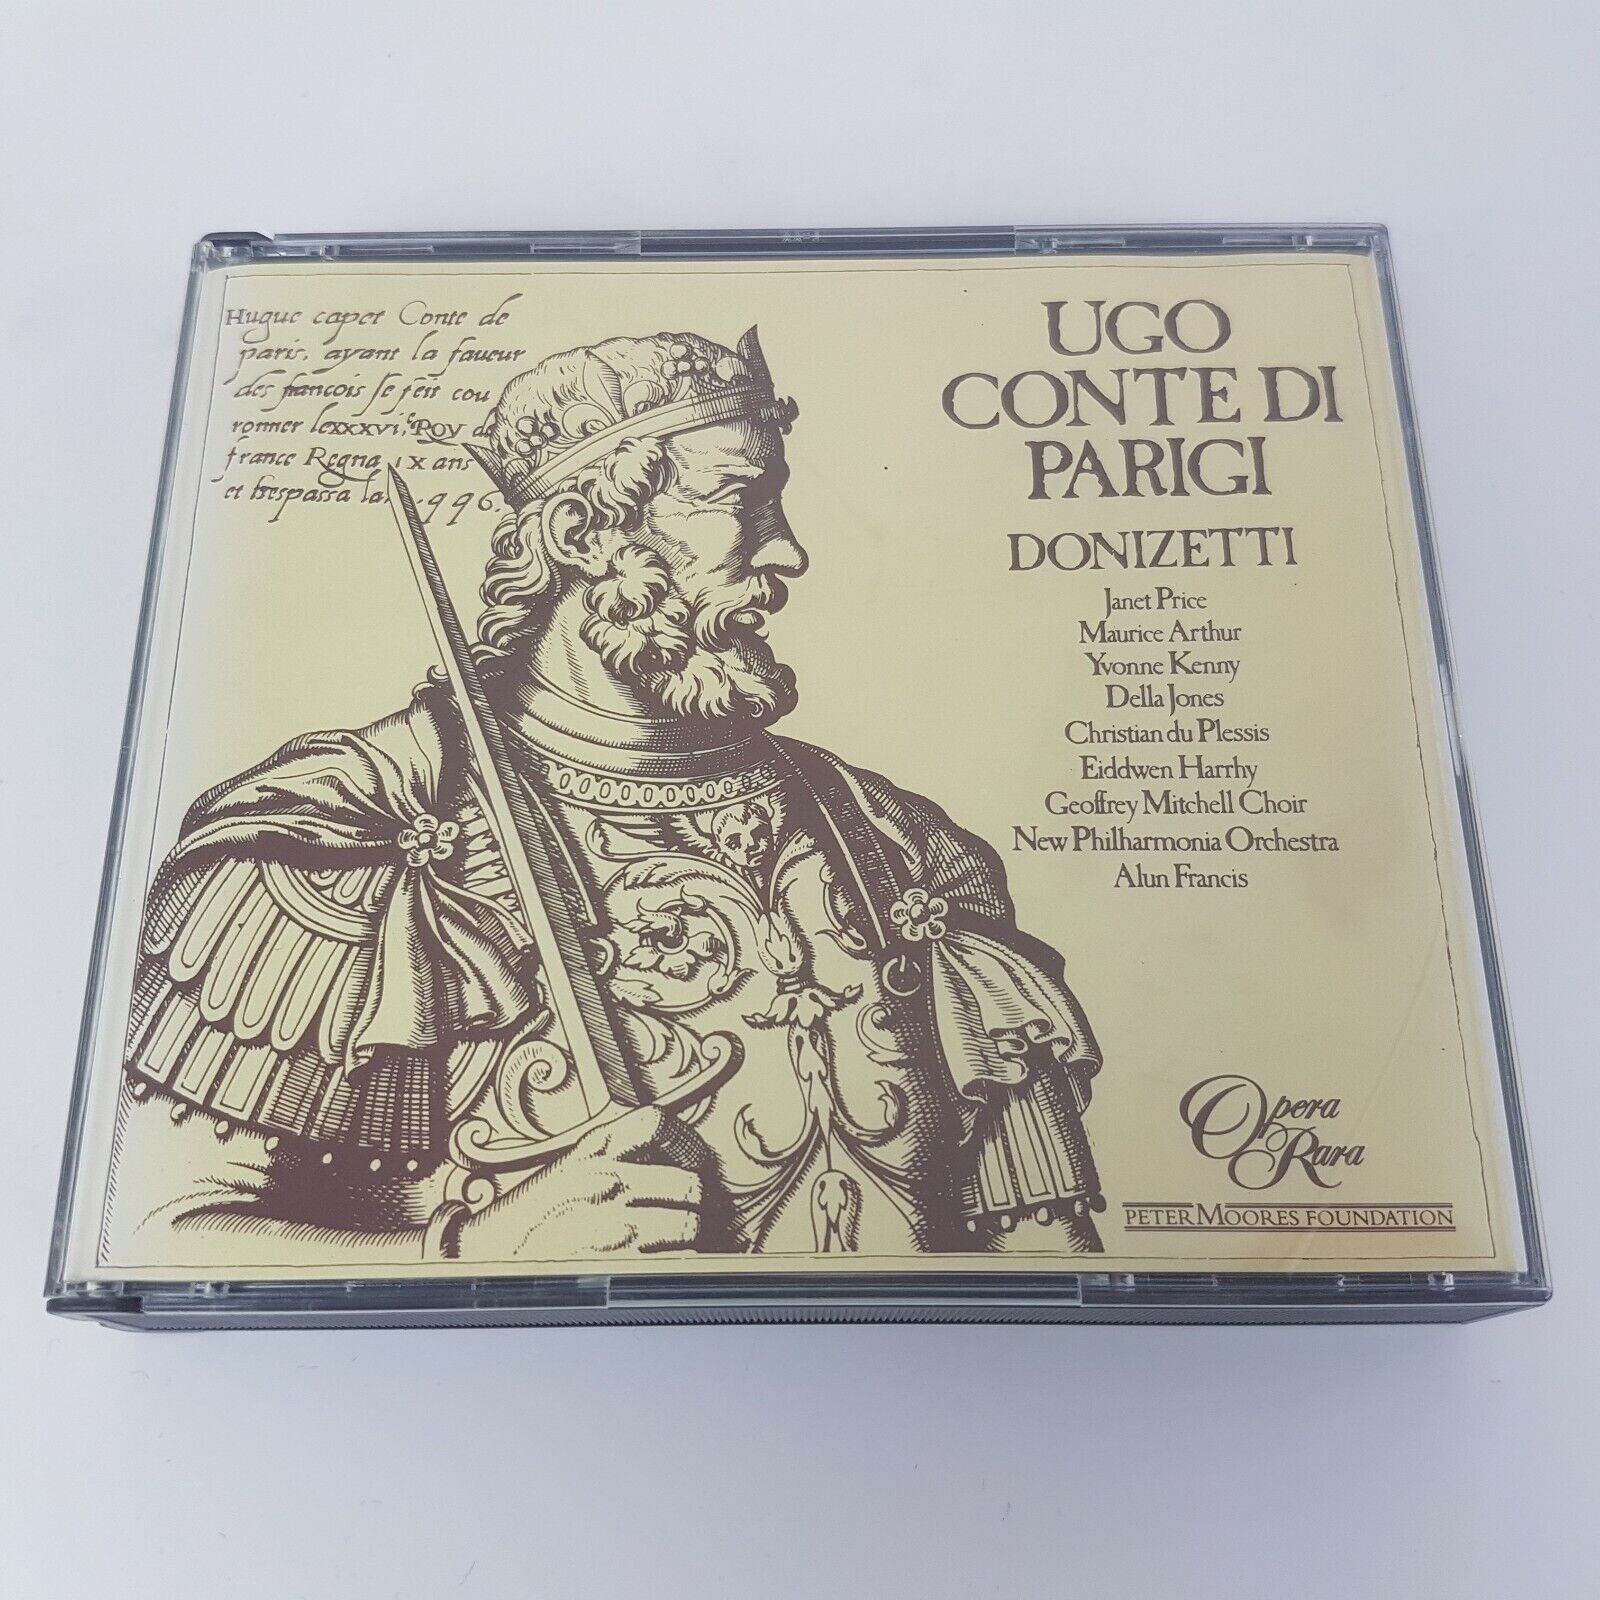 Donizetti UGO CONTE DI PARIGI | 3 CD Box Set (1977) OPERA RARA London